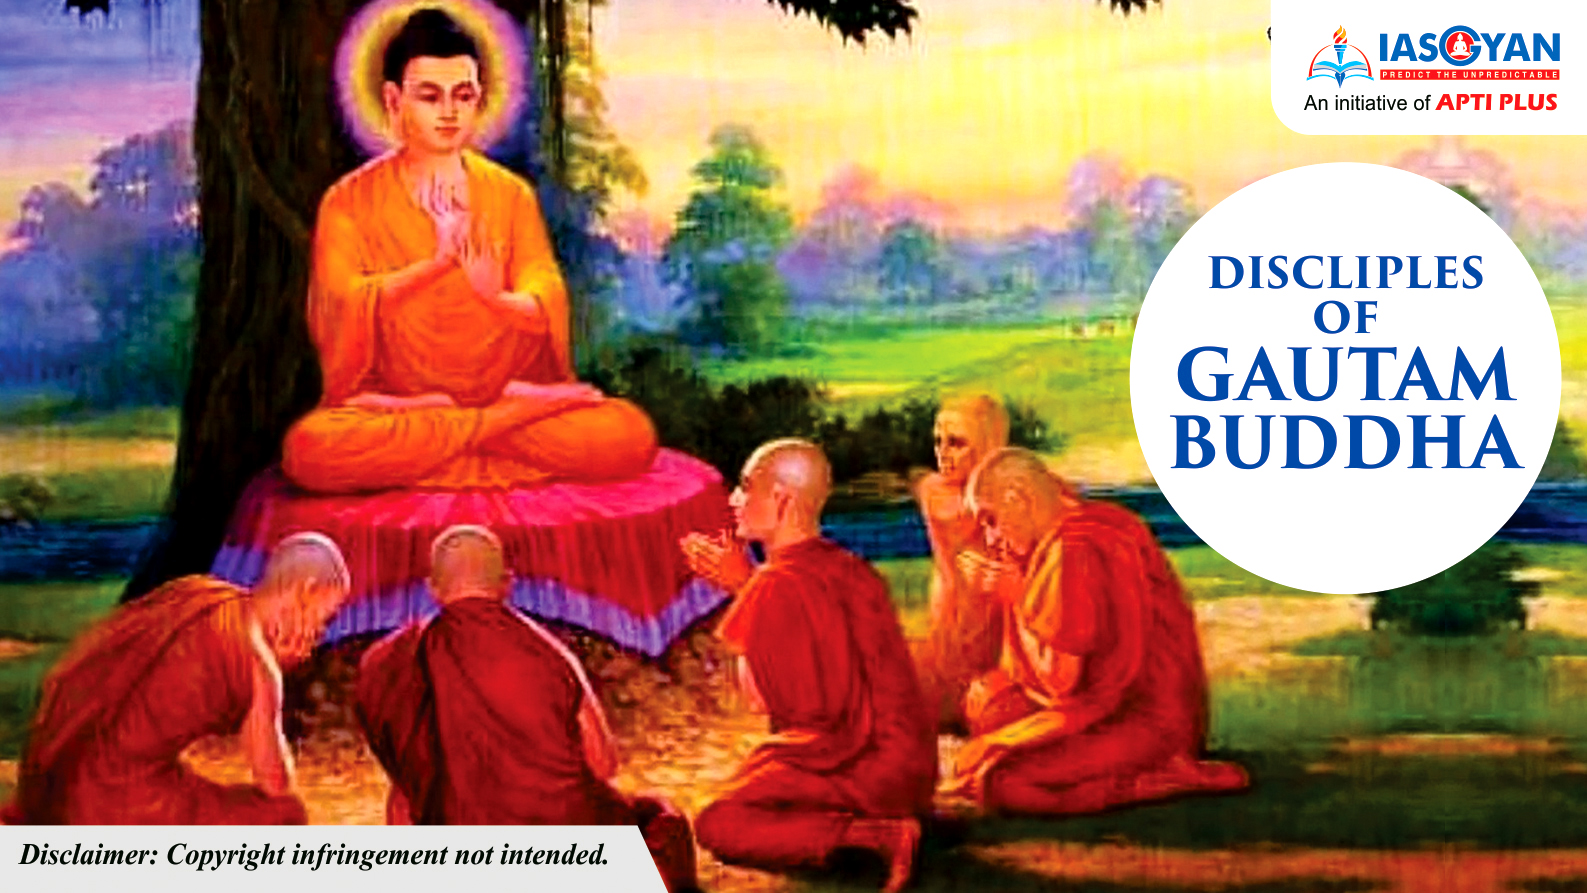 NOTABLE DISCLIPLES OF GAUTAM BUDDHA